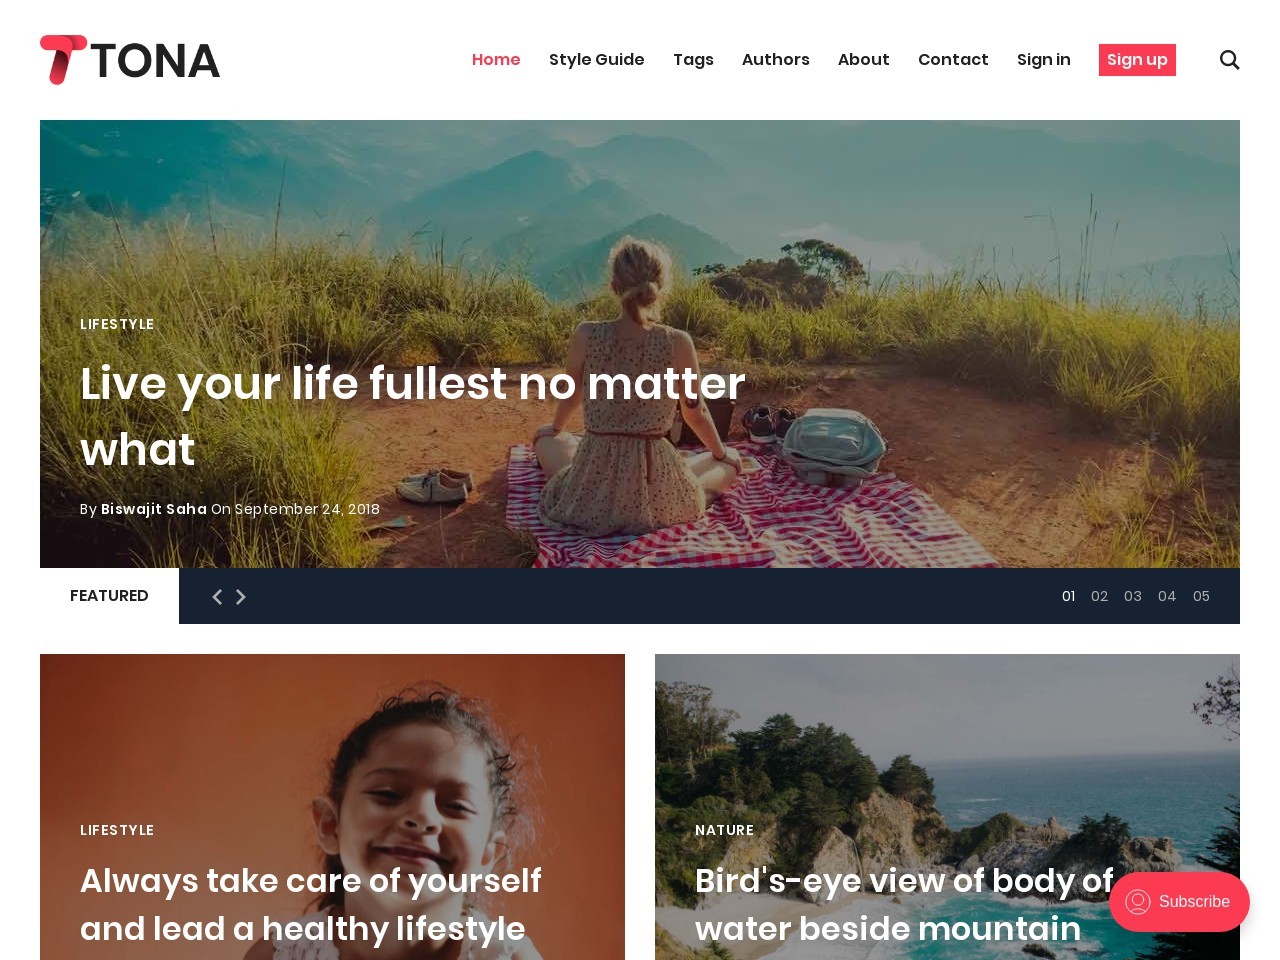 Tona - Content Focused Blog And Magazine Ghost Theme